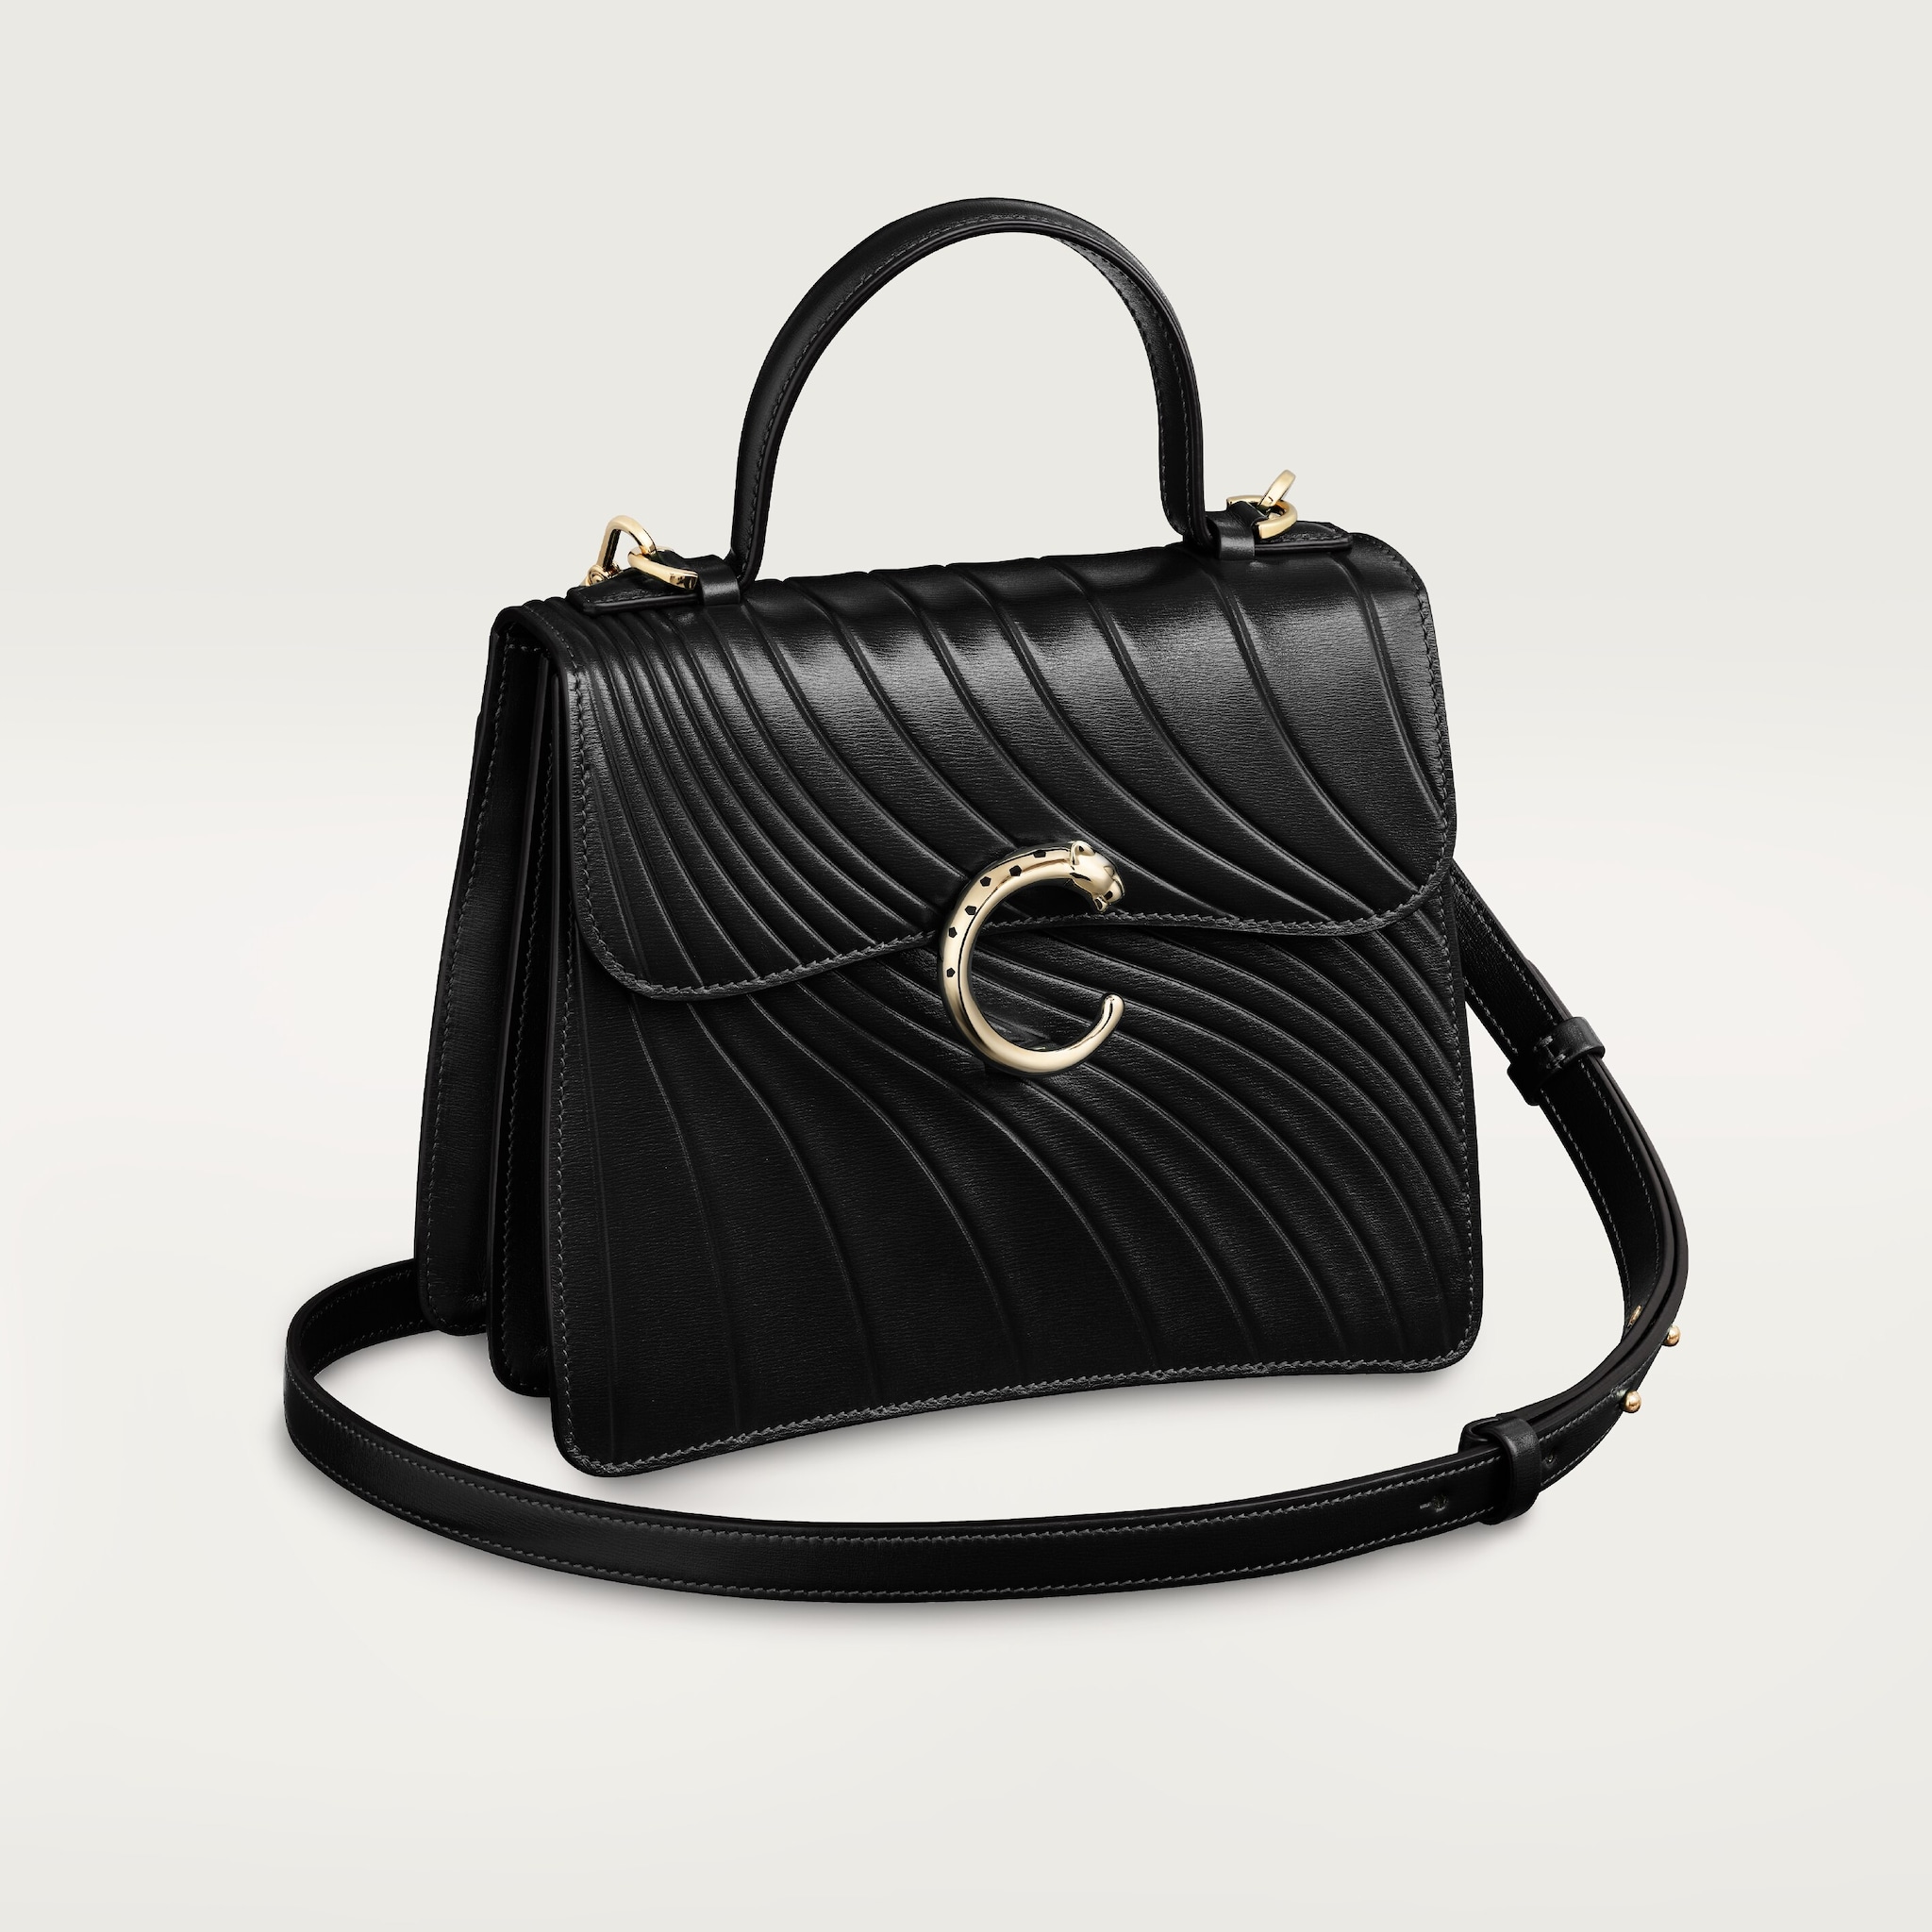 Handle bag mini model, Panthère de CartierBlack calfskin, embossed Cartier signature motif, golden finish